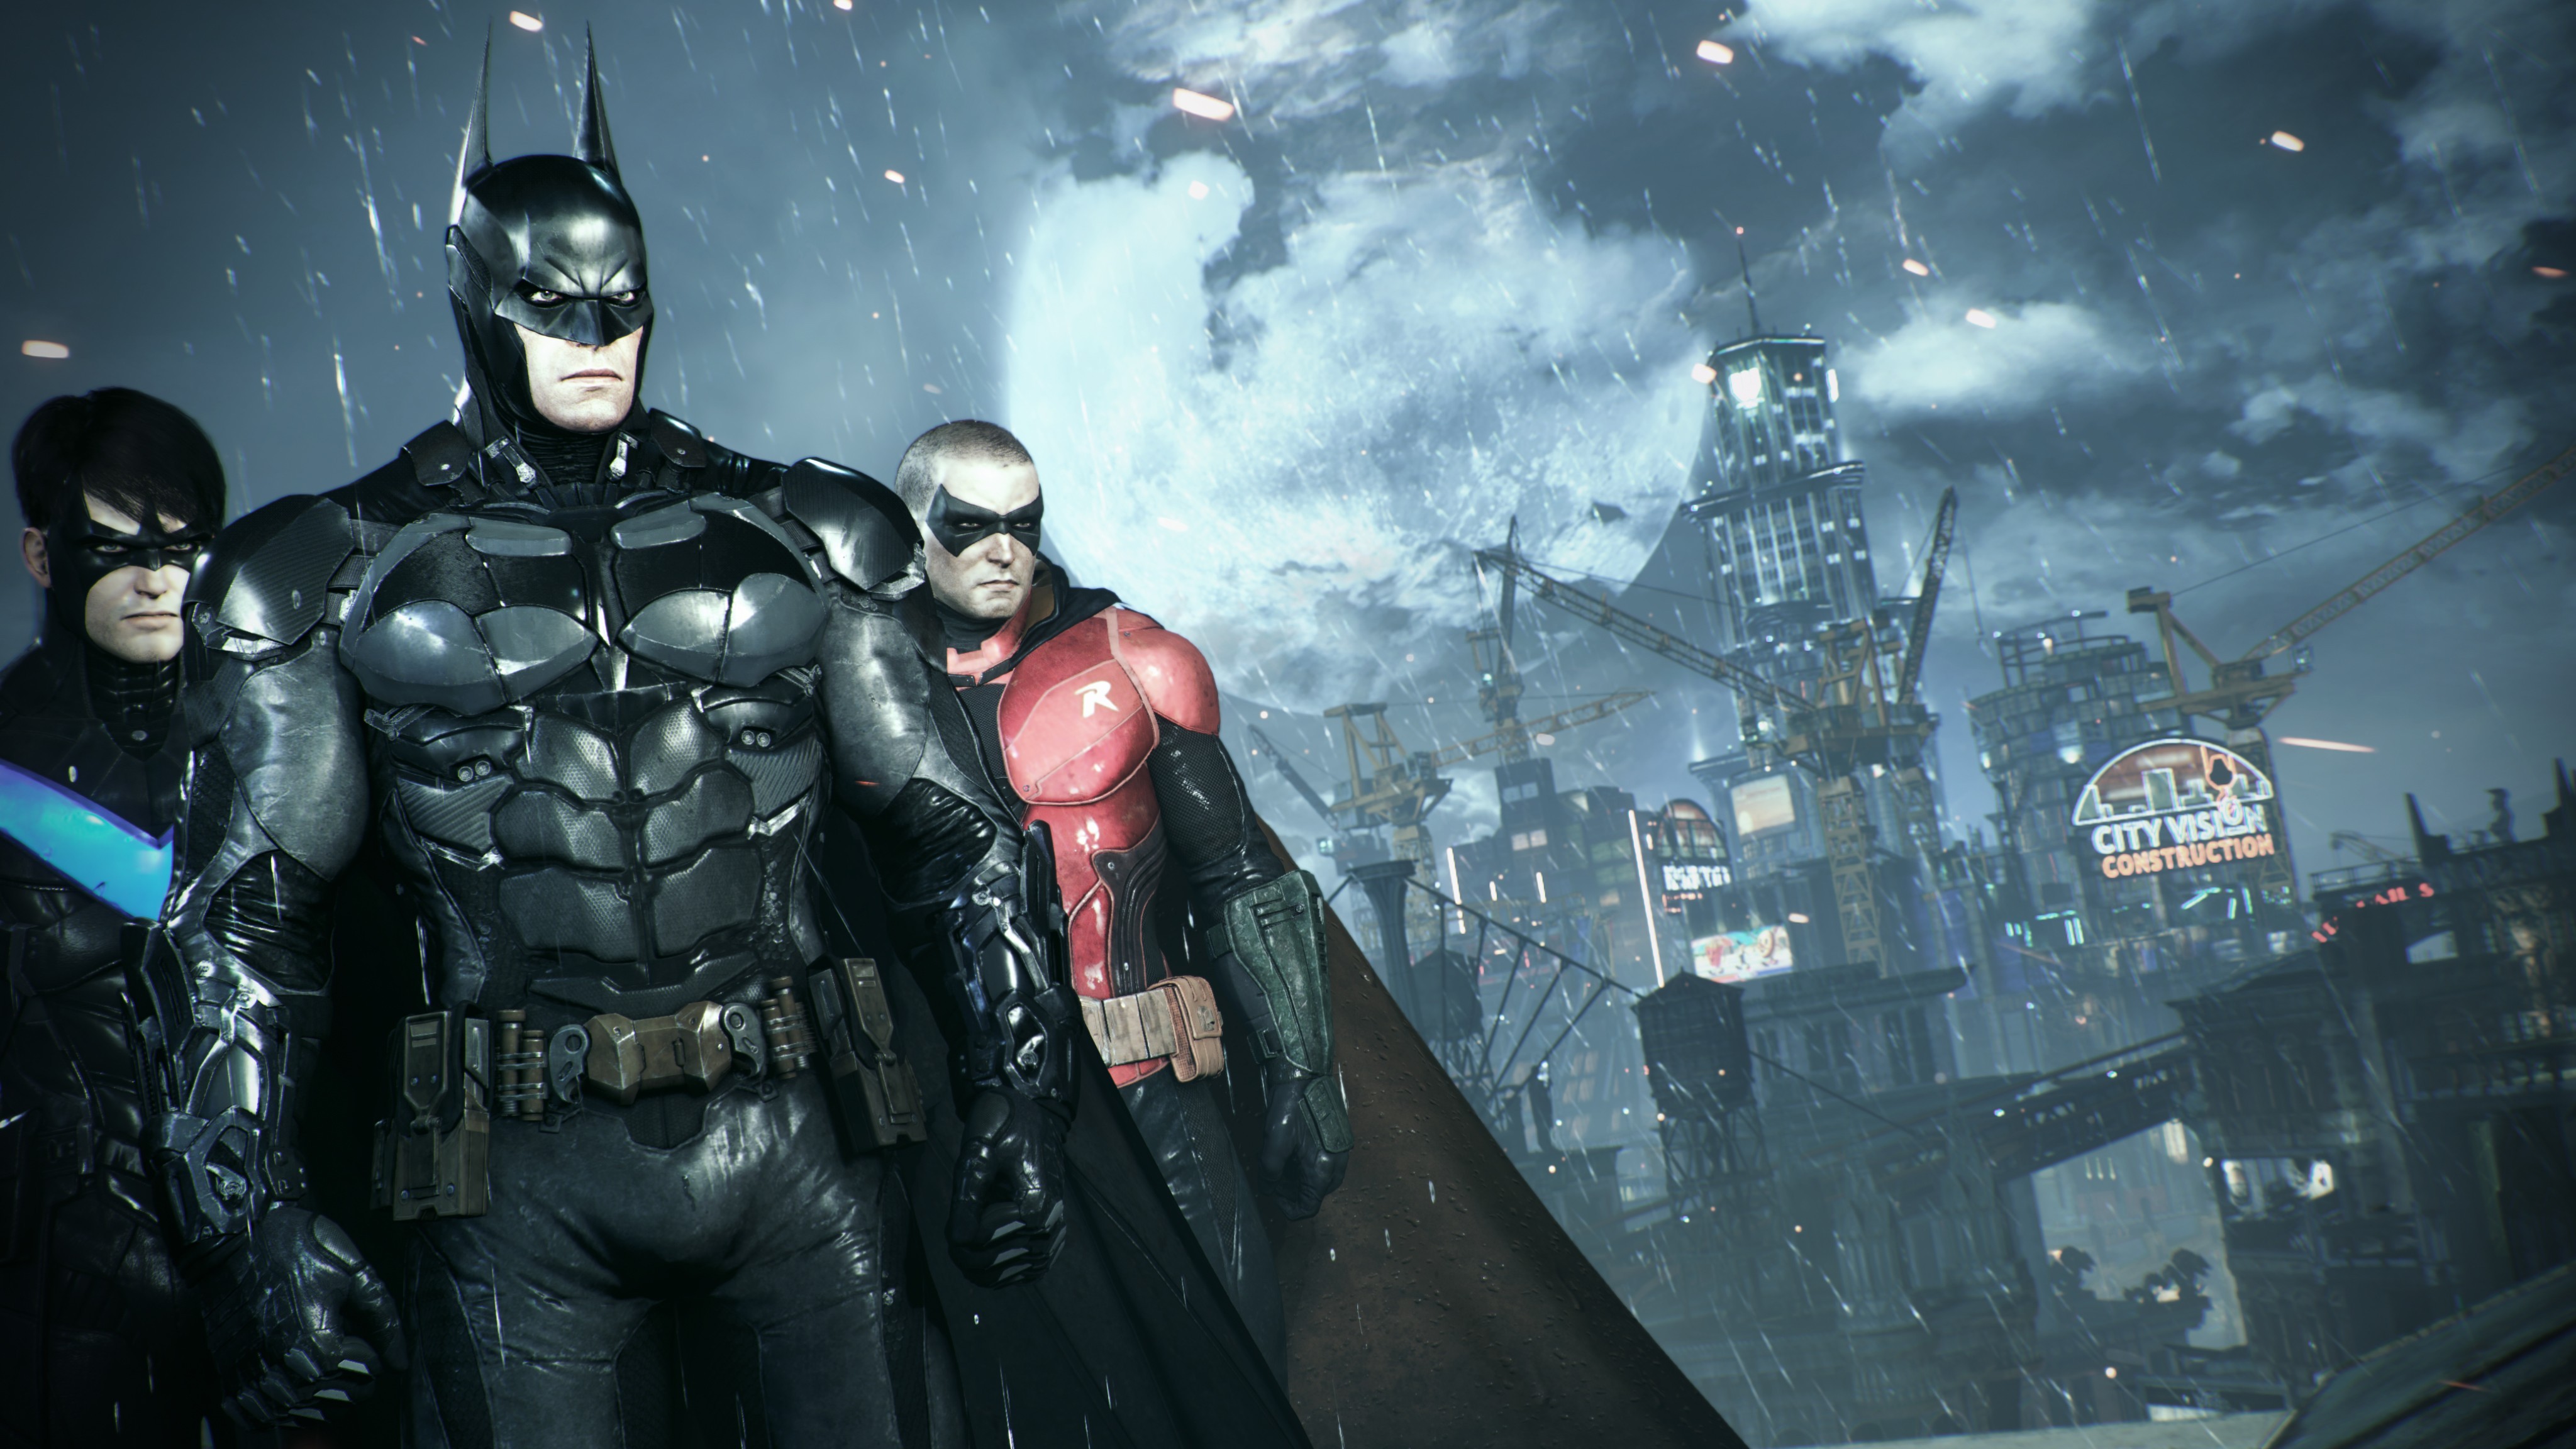 Batman Batman Arkham Knight Gotham City Nightwing Robin Character Video Games 4096x2304